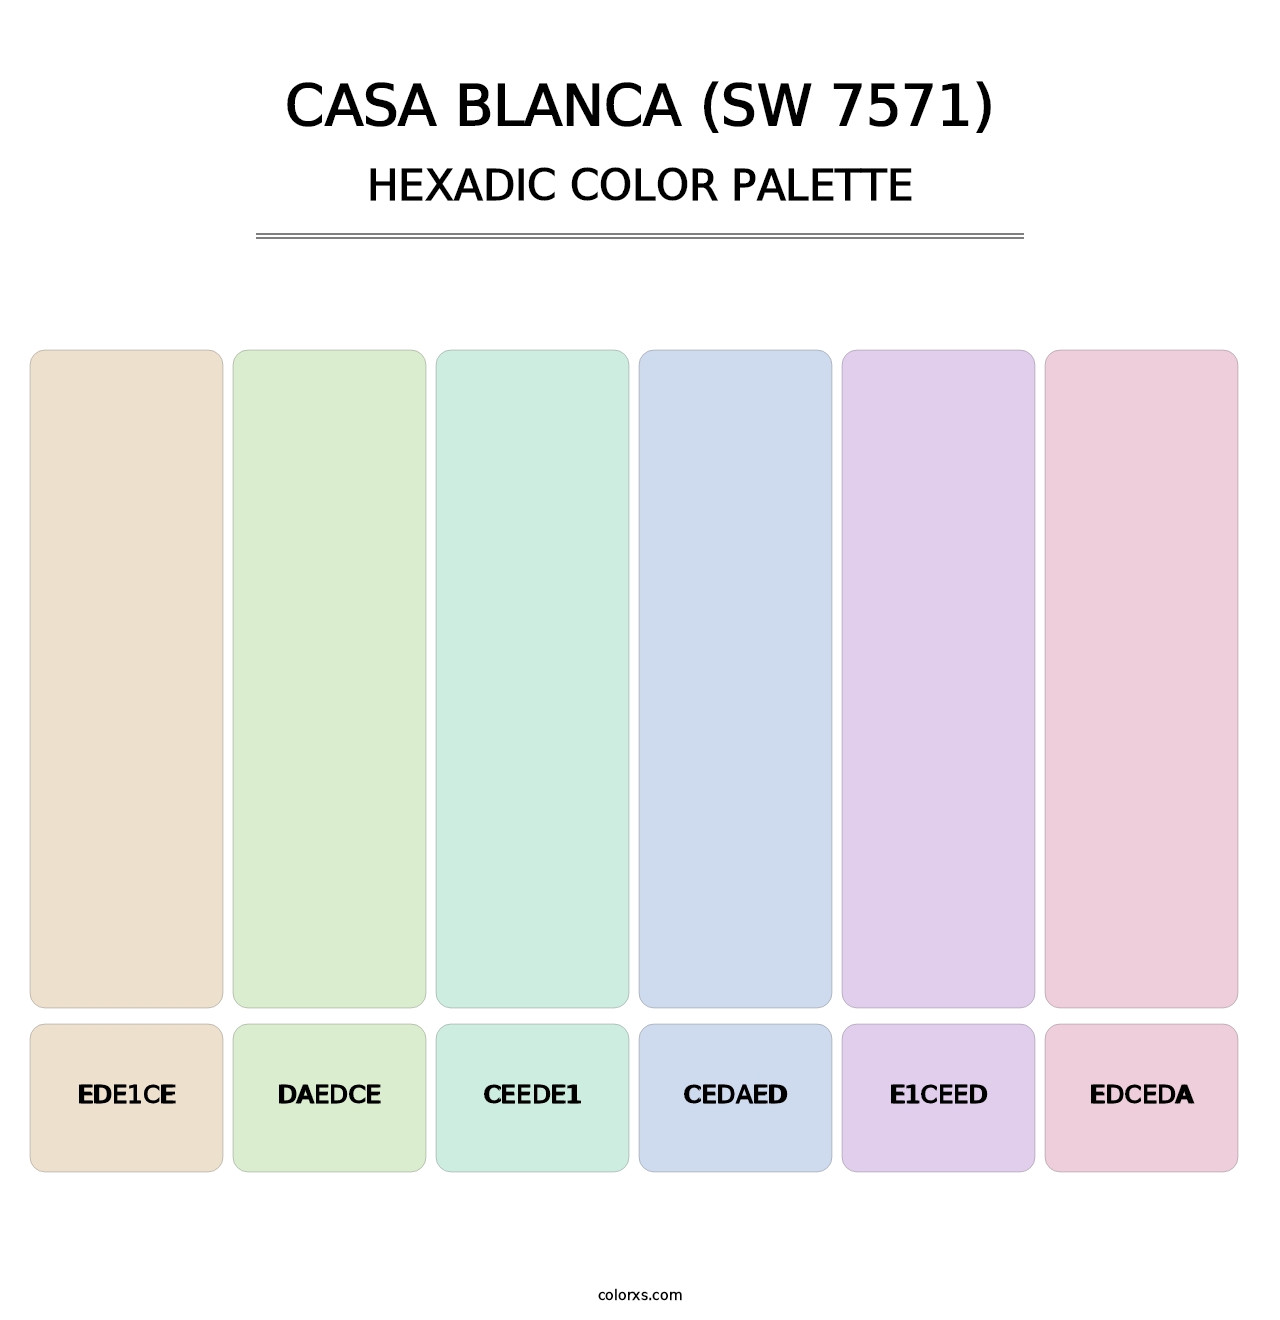 Casa Blanca (SW 7571) - Hexadic Color Palette